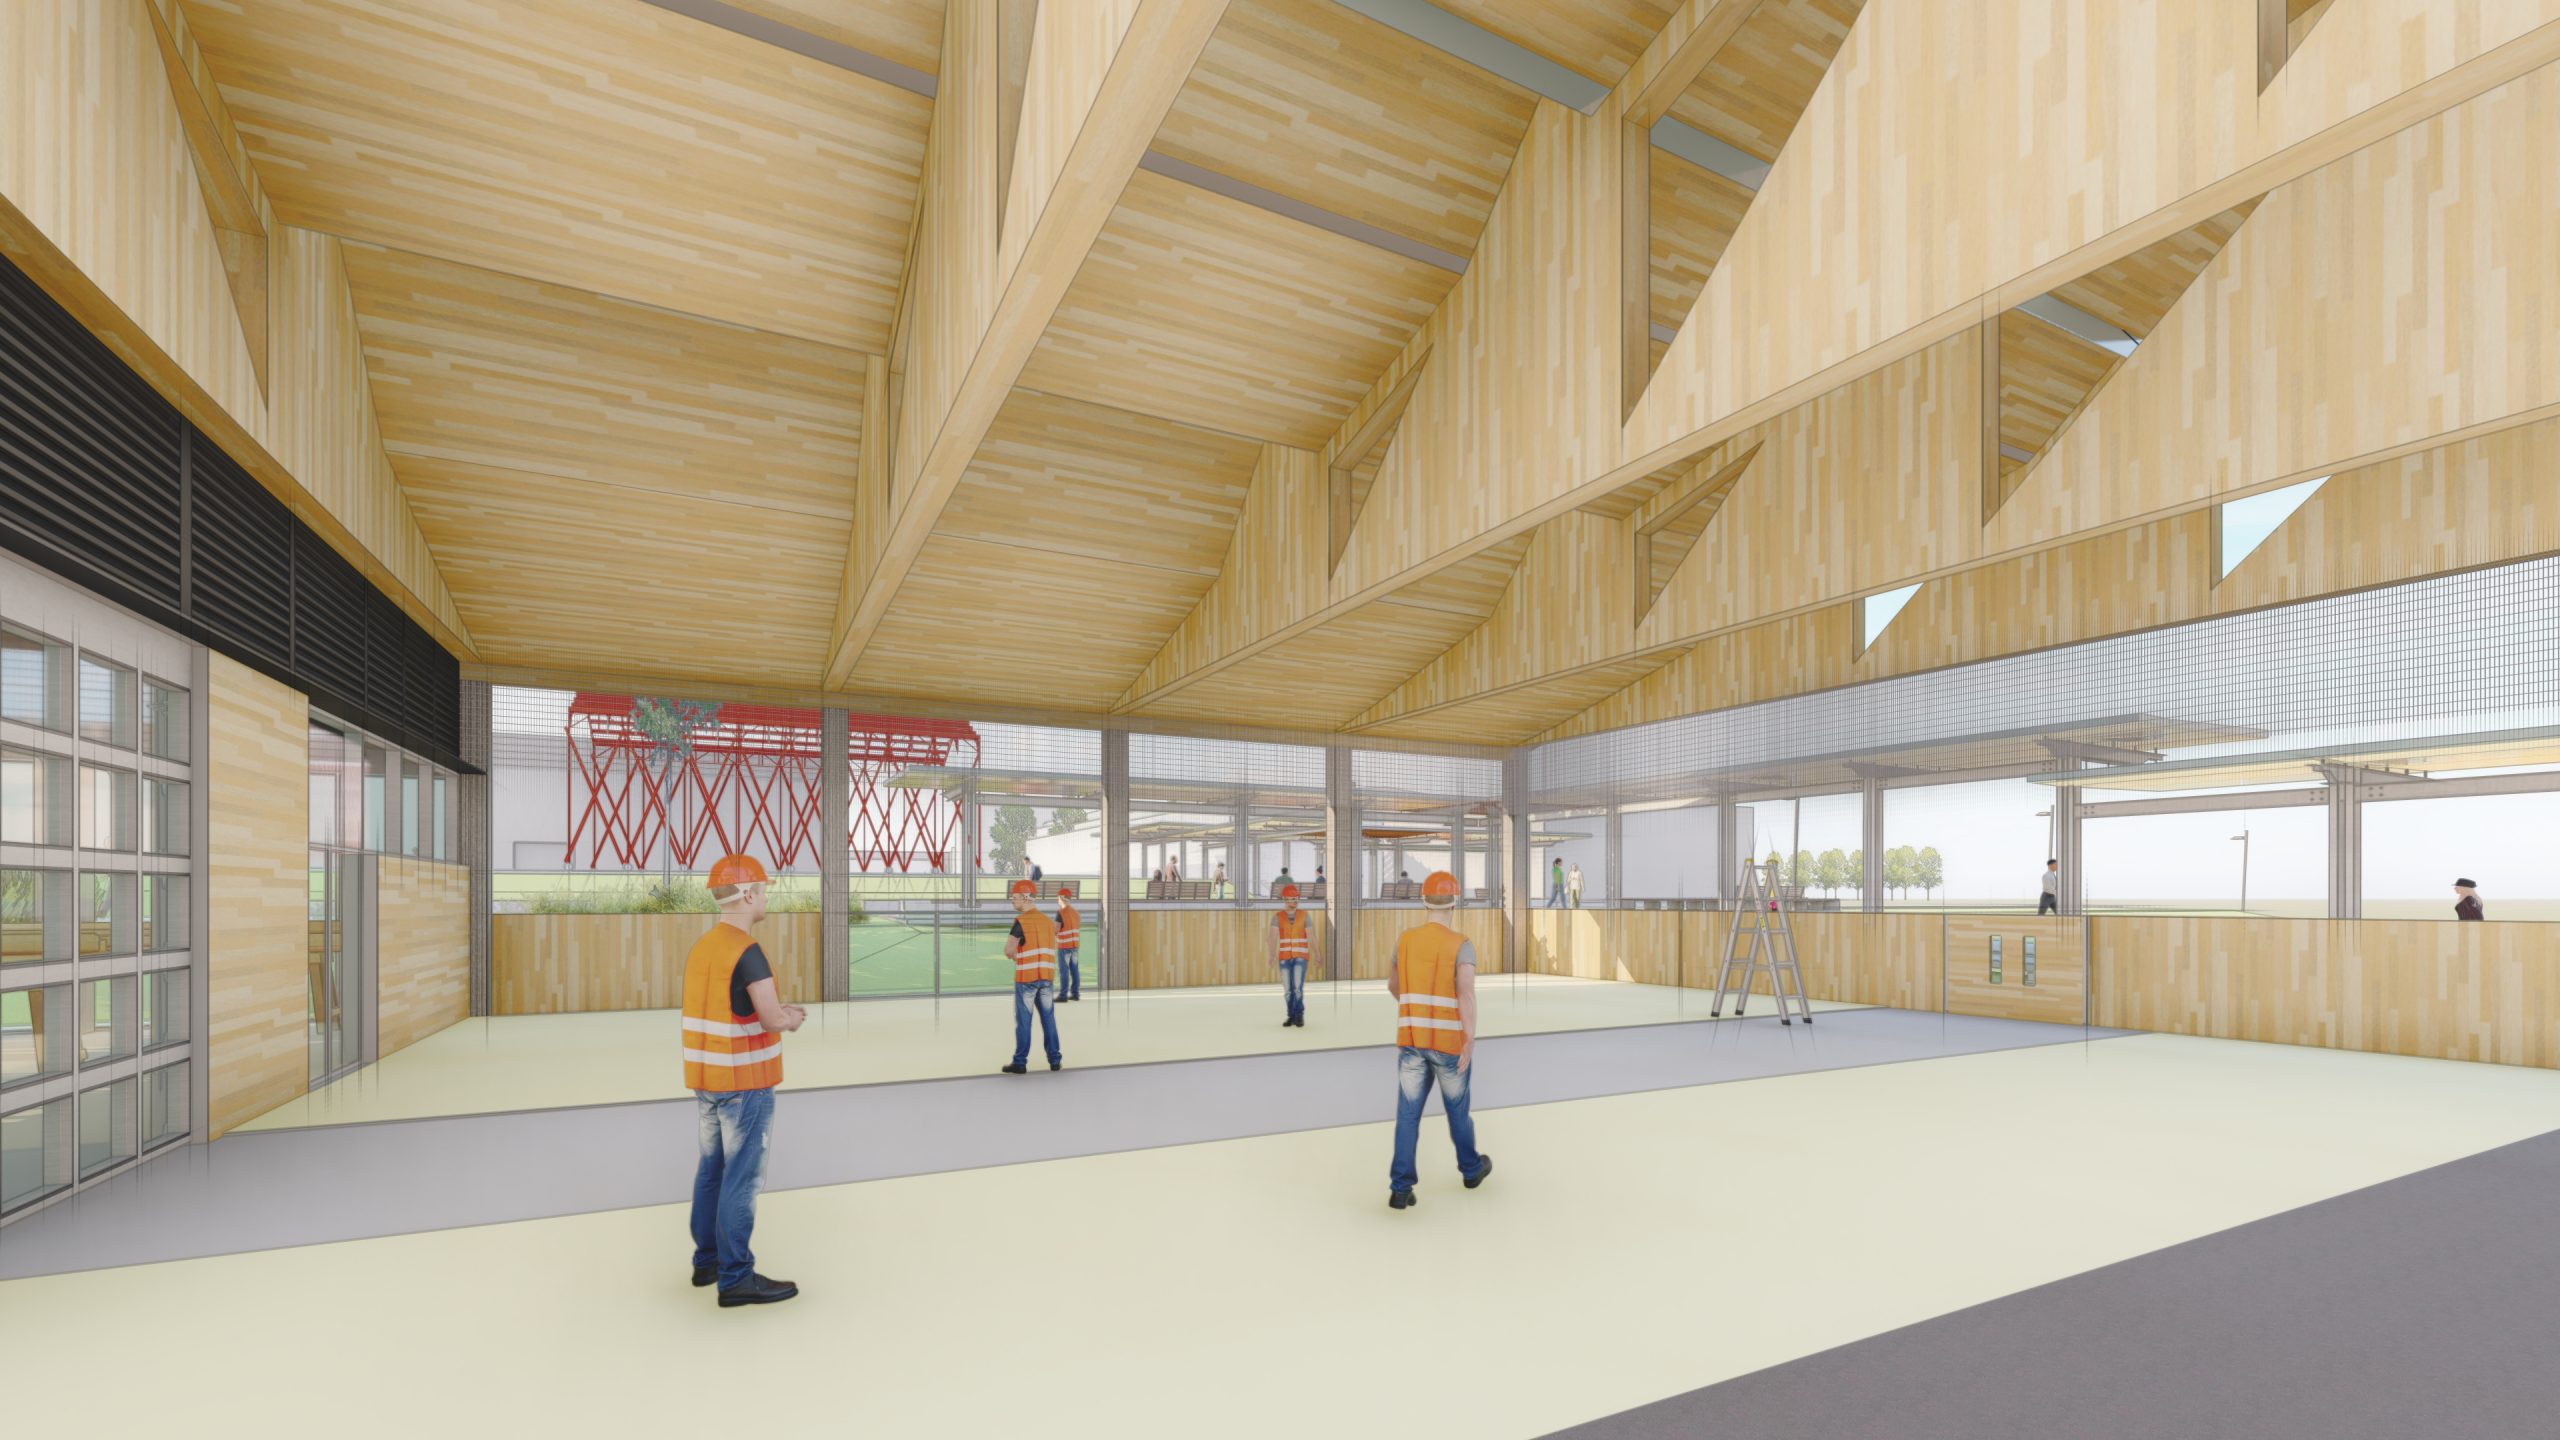 An image of the NE21 Carpentry Pavilion Interior